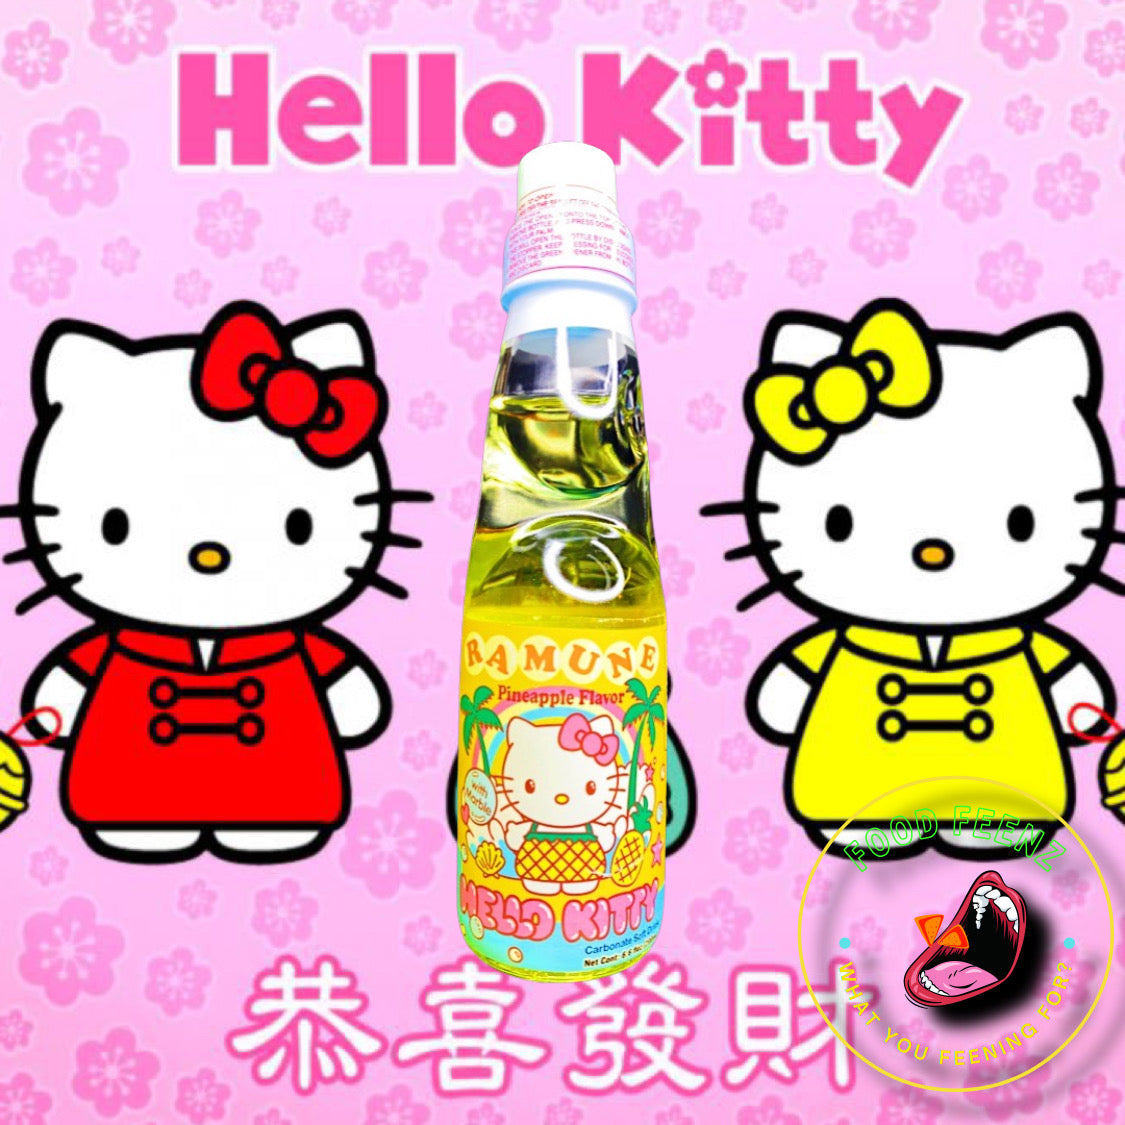 Hello Kitty Ramune Pineapple Flavor (Japan)